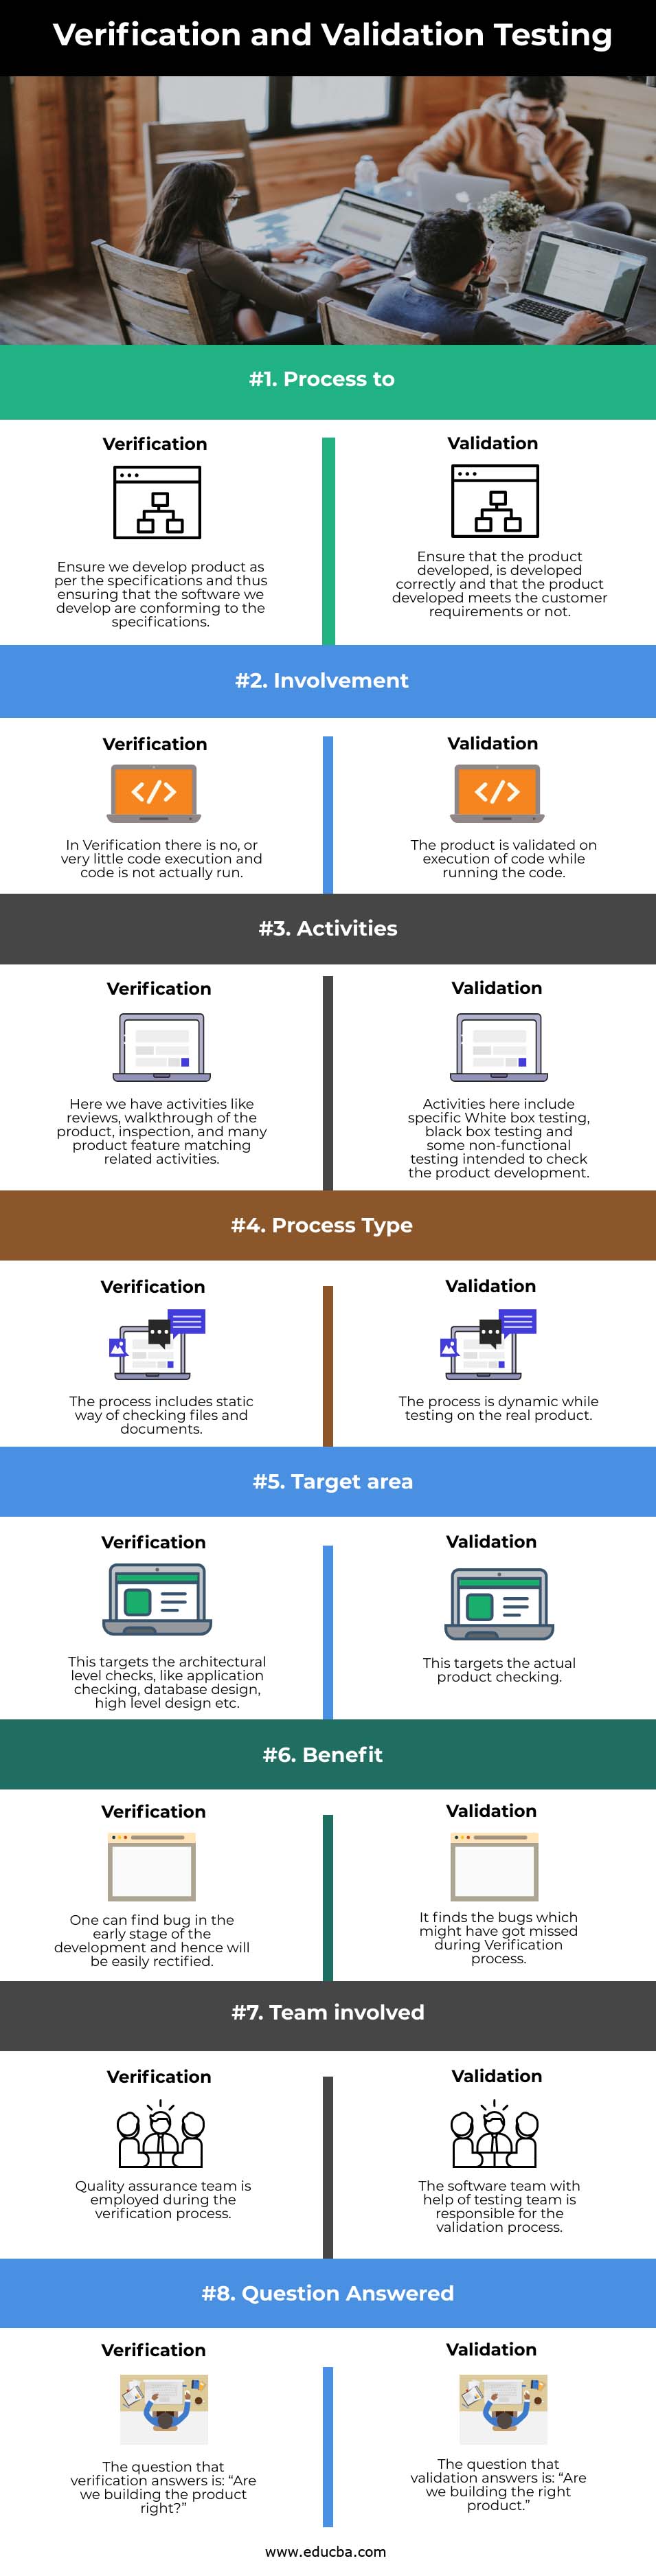 Verification and Validation Testing info